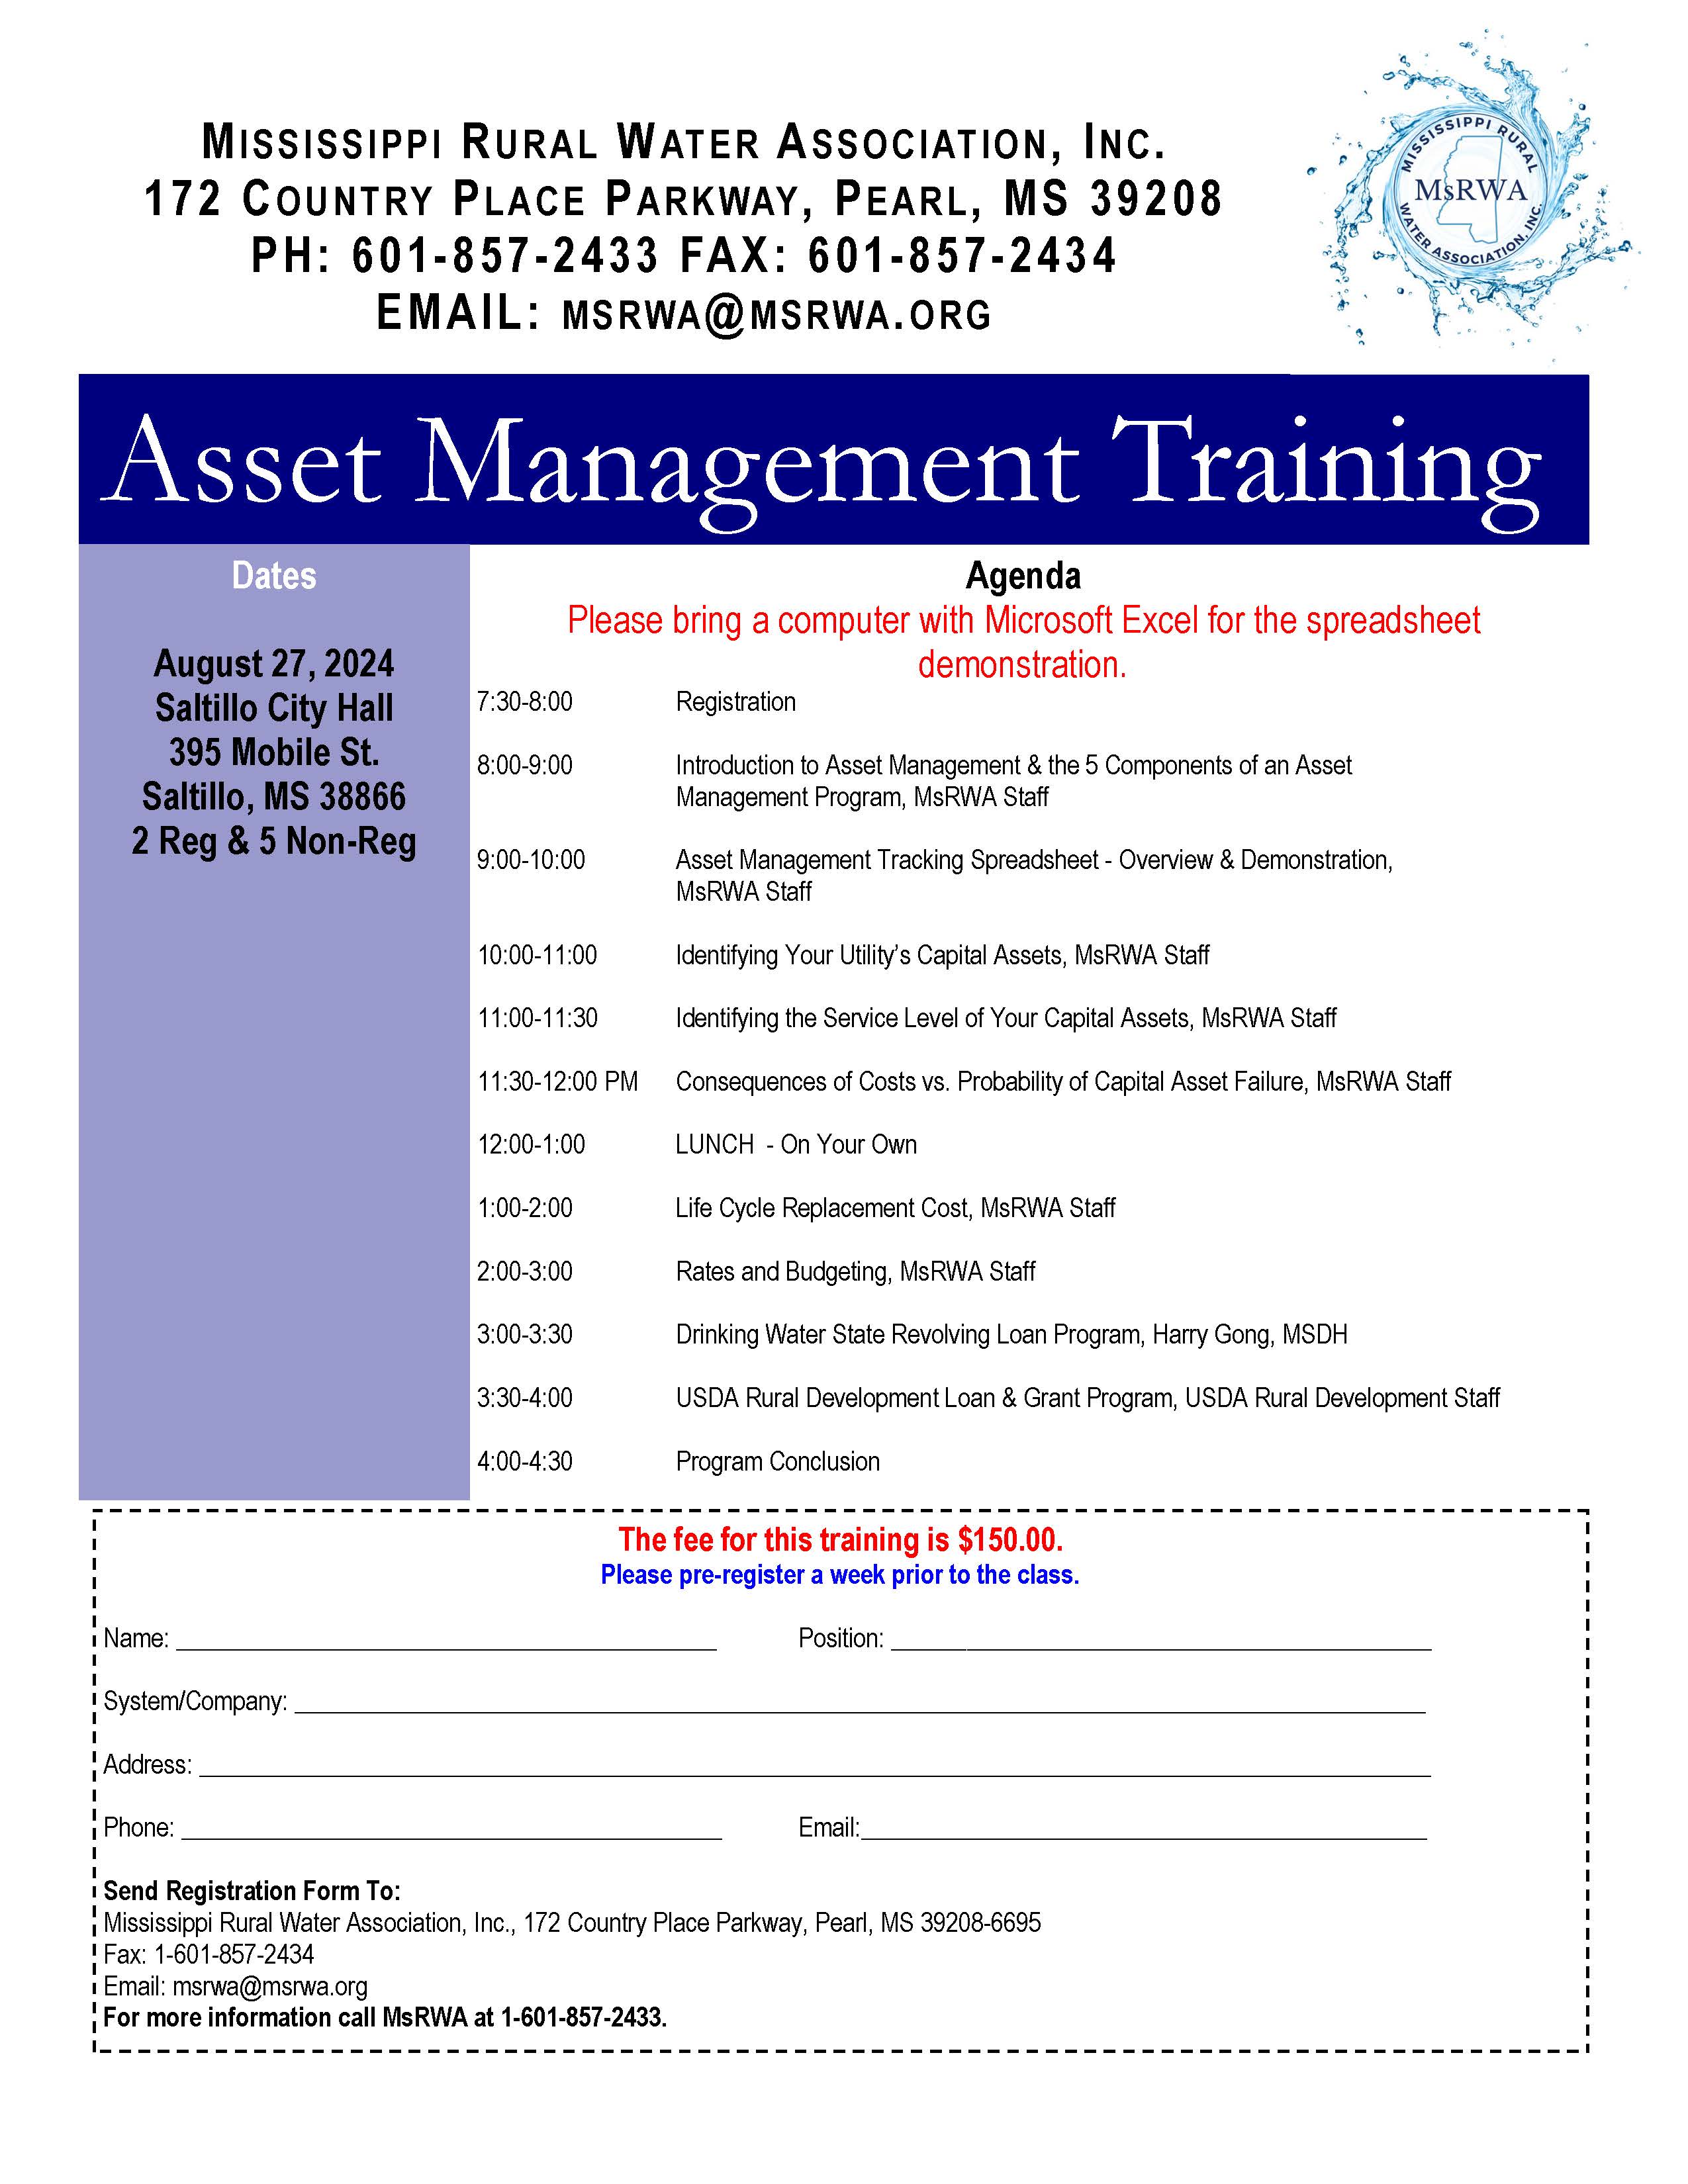 08/27/24 Asset Management Training - Saltillo